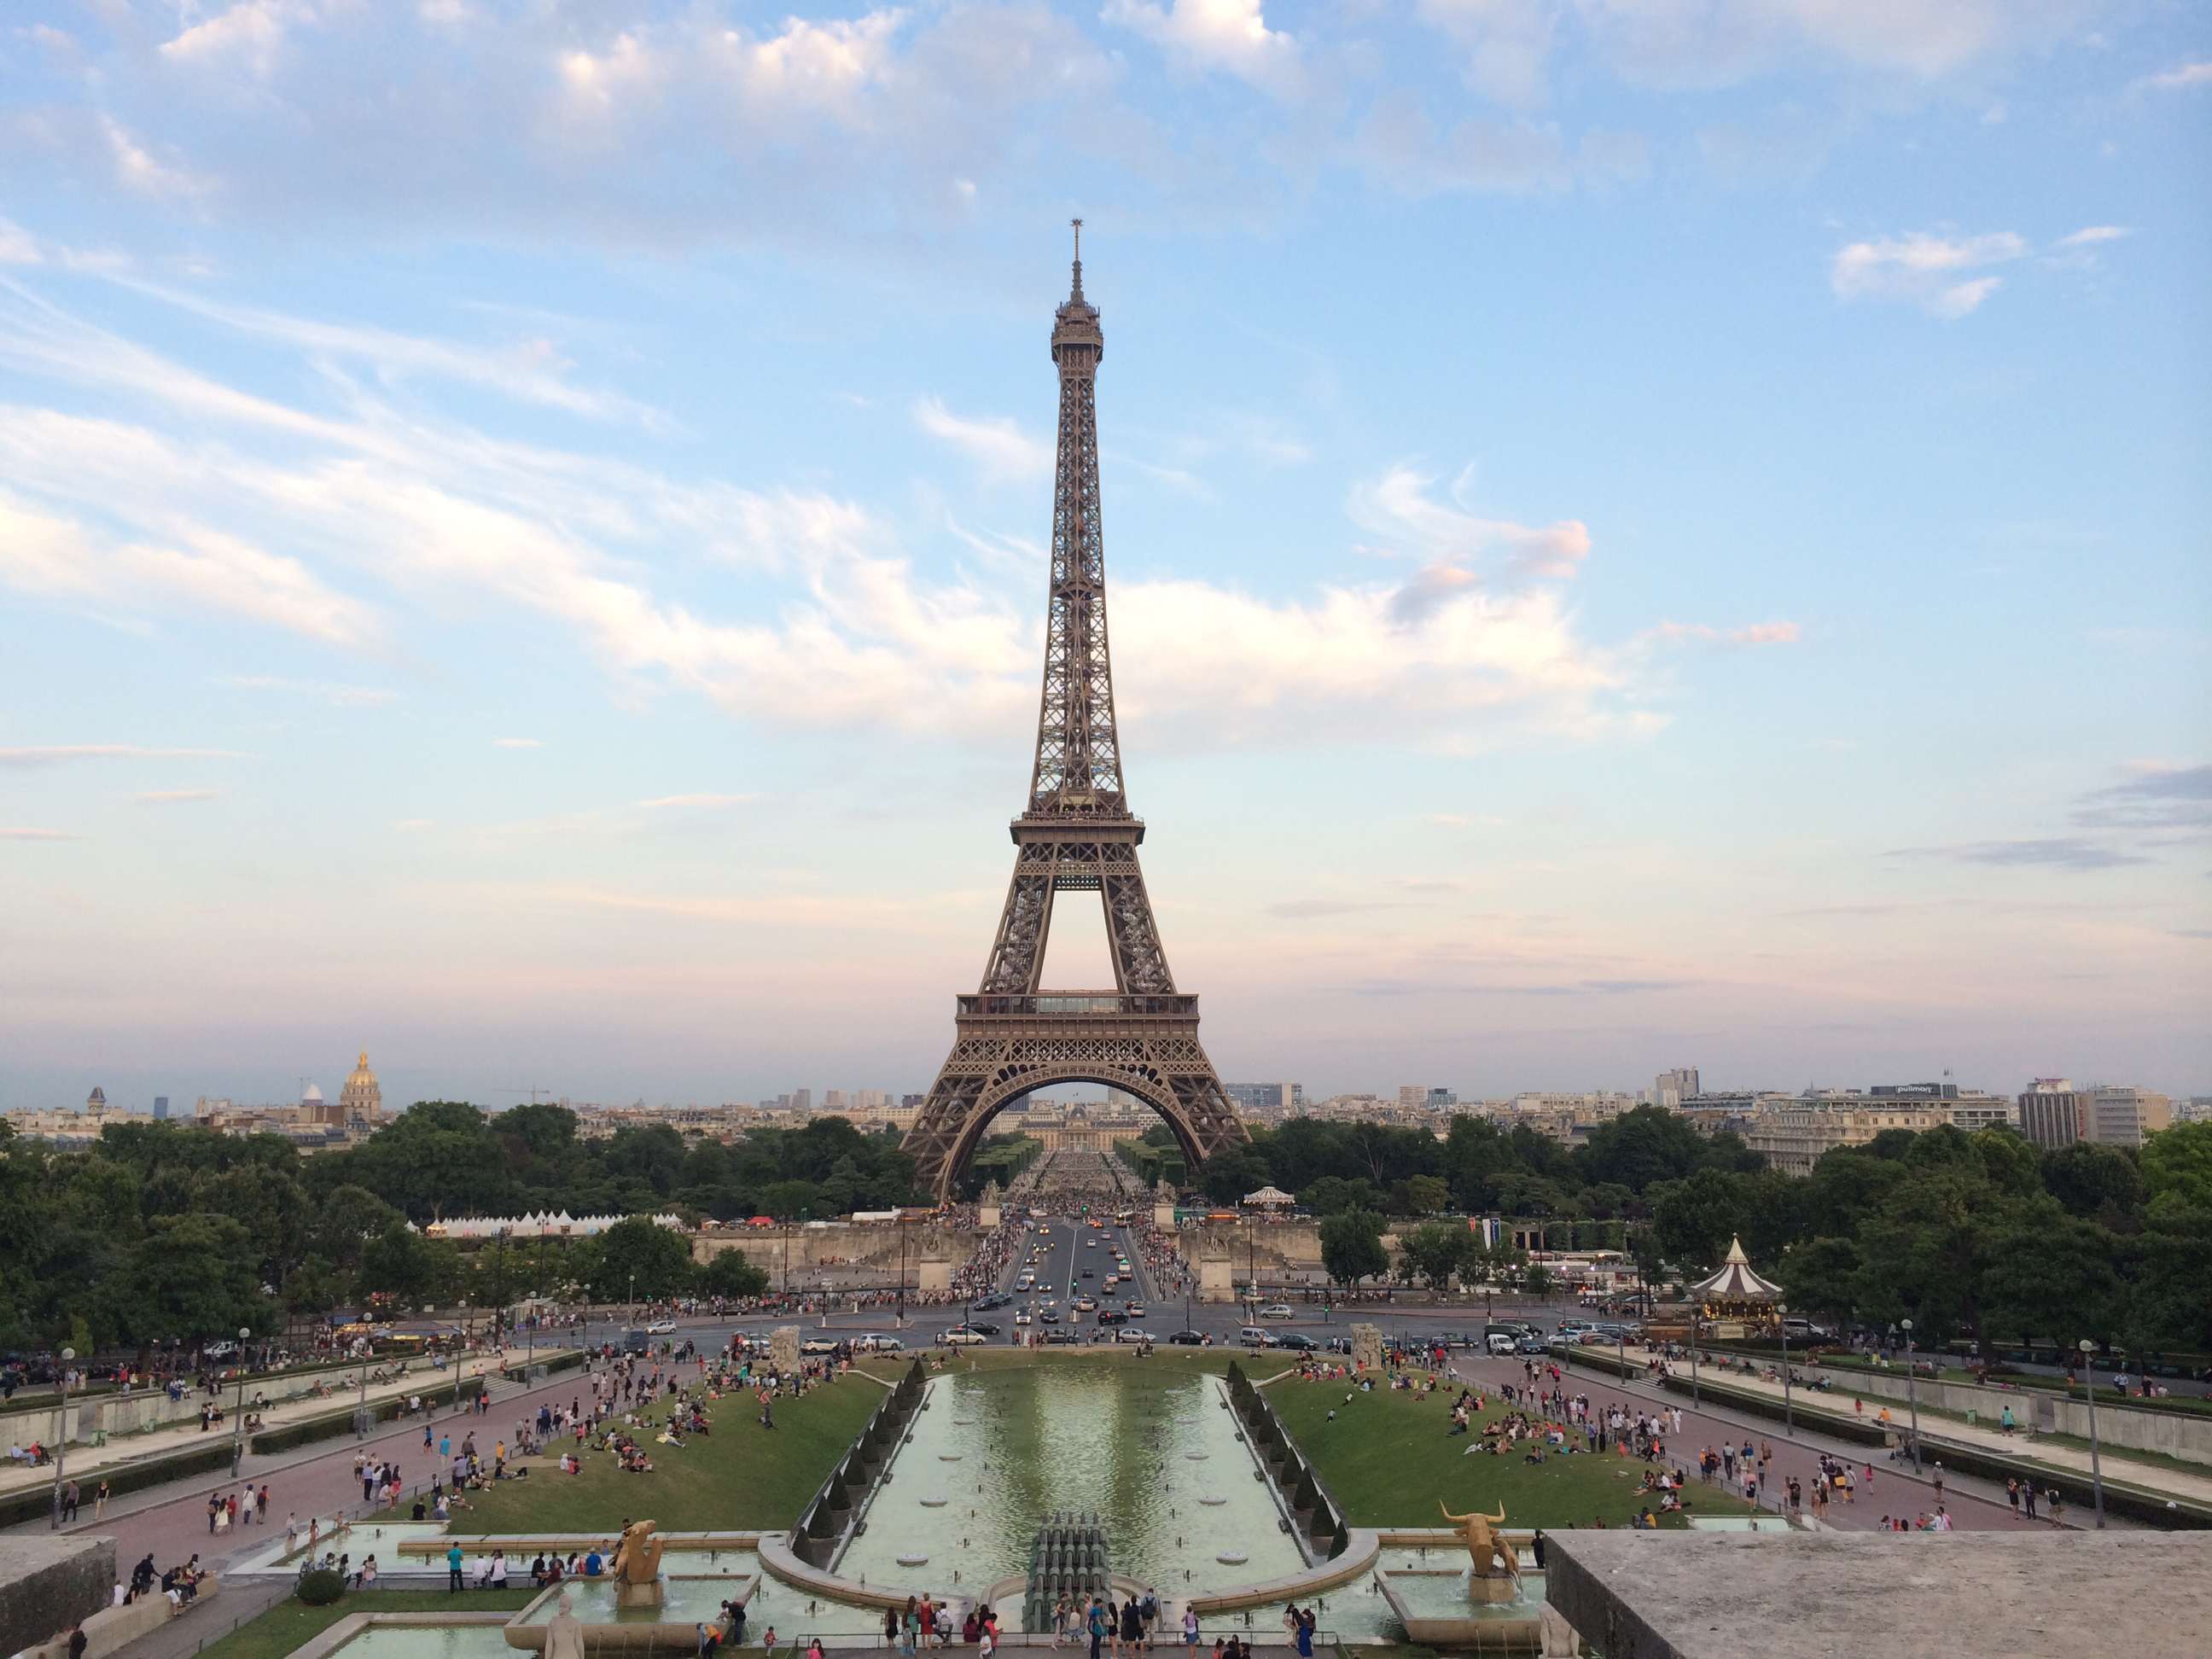 Eiffel Tower Tickets, Book Tickets to Summit, Find the Best Prices